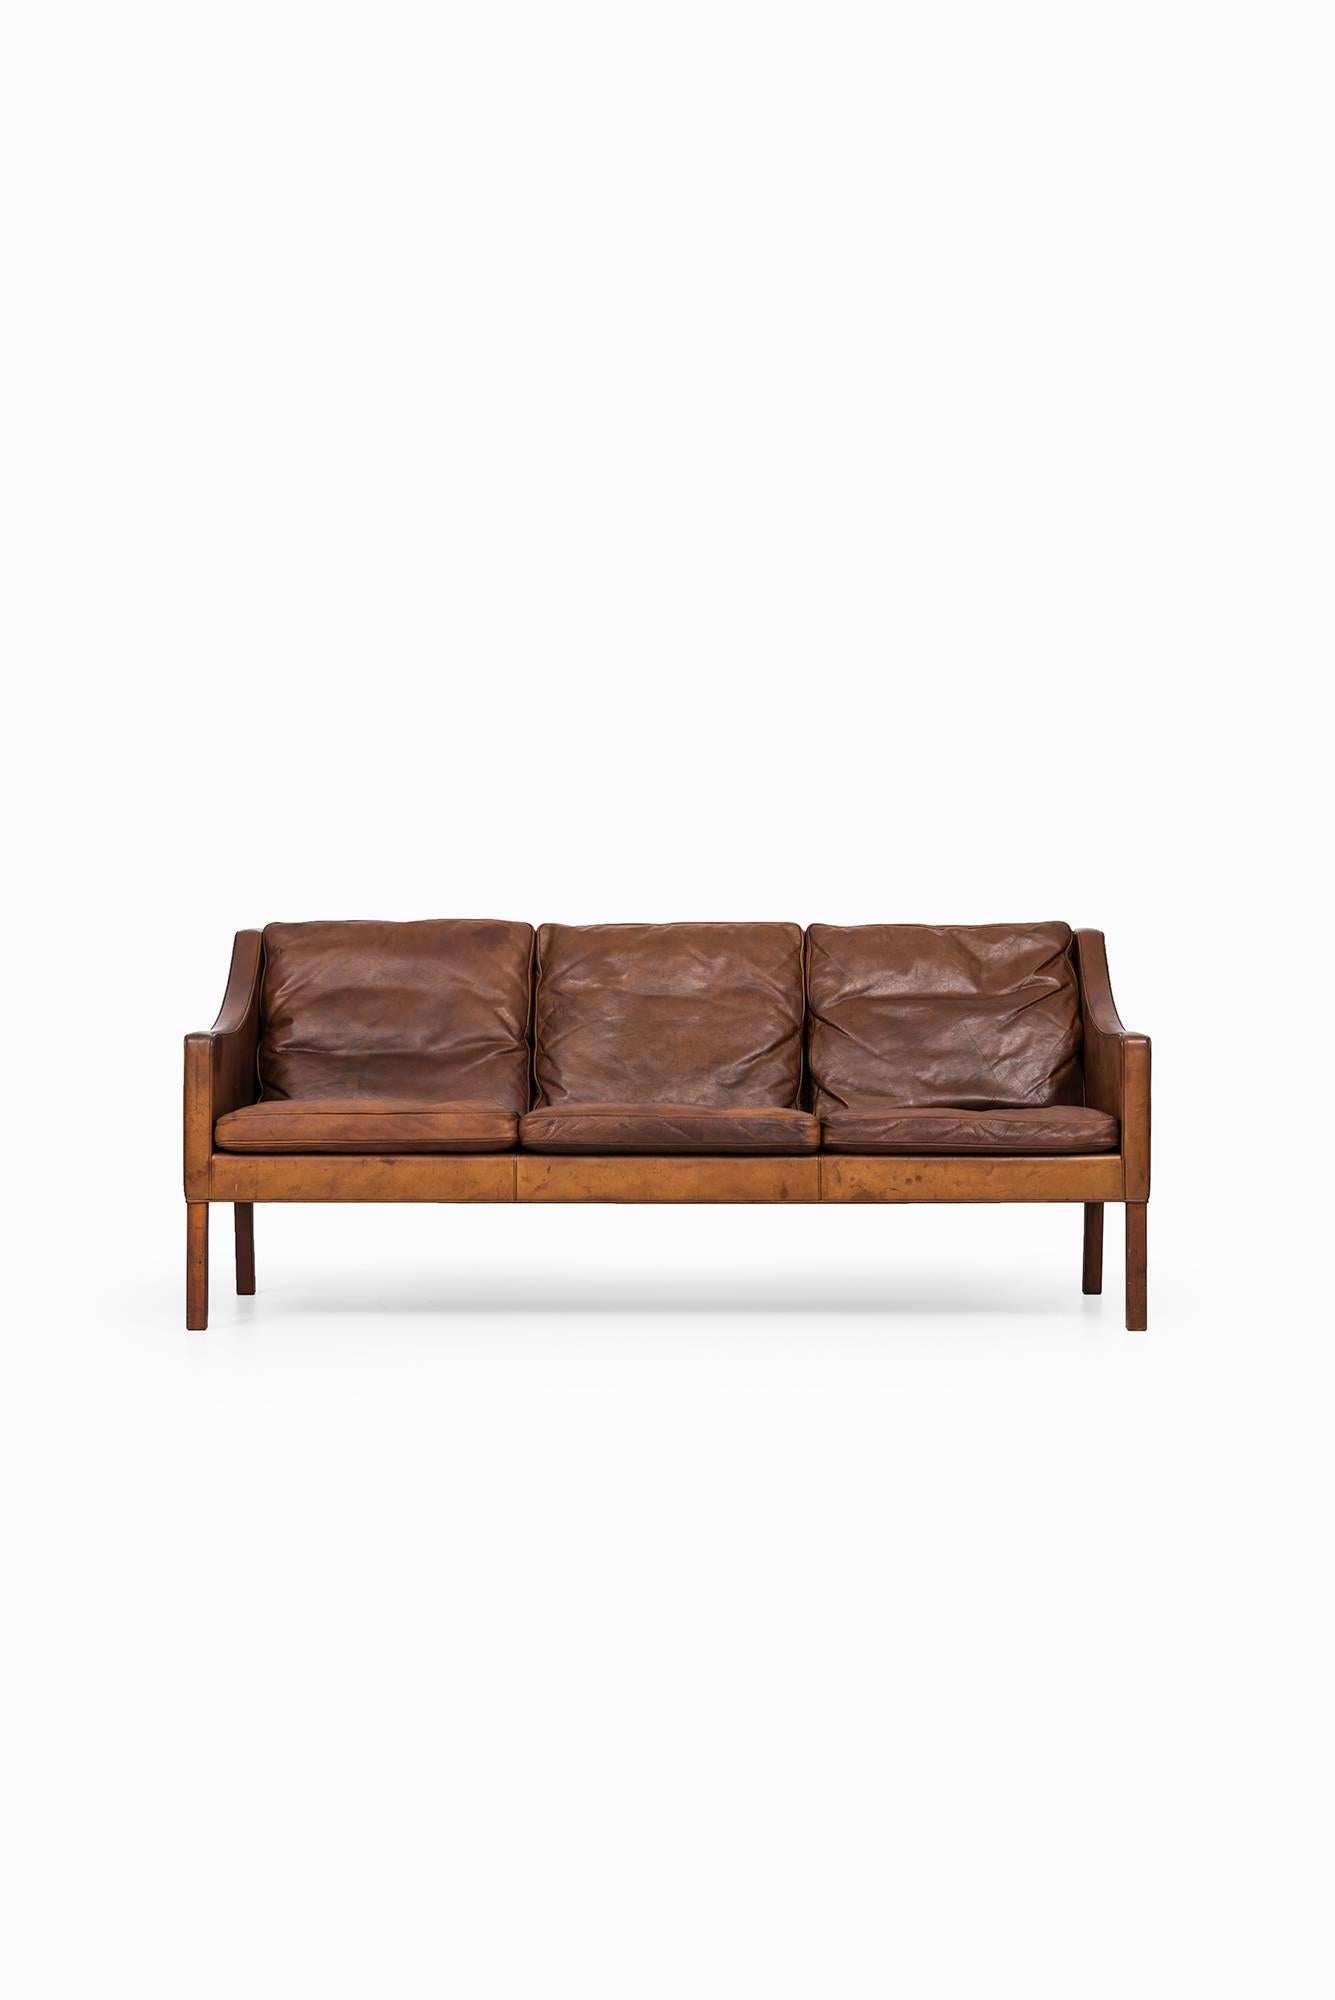 Rare sofa model 2209 designed by Børge Mogensen. Produced by Fredericia stolefabrik in Denmark.